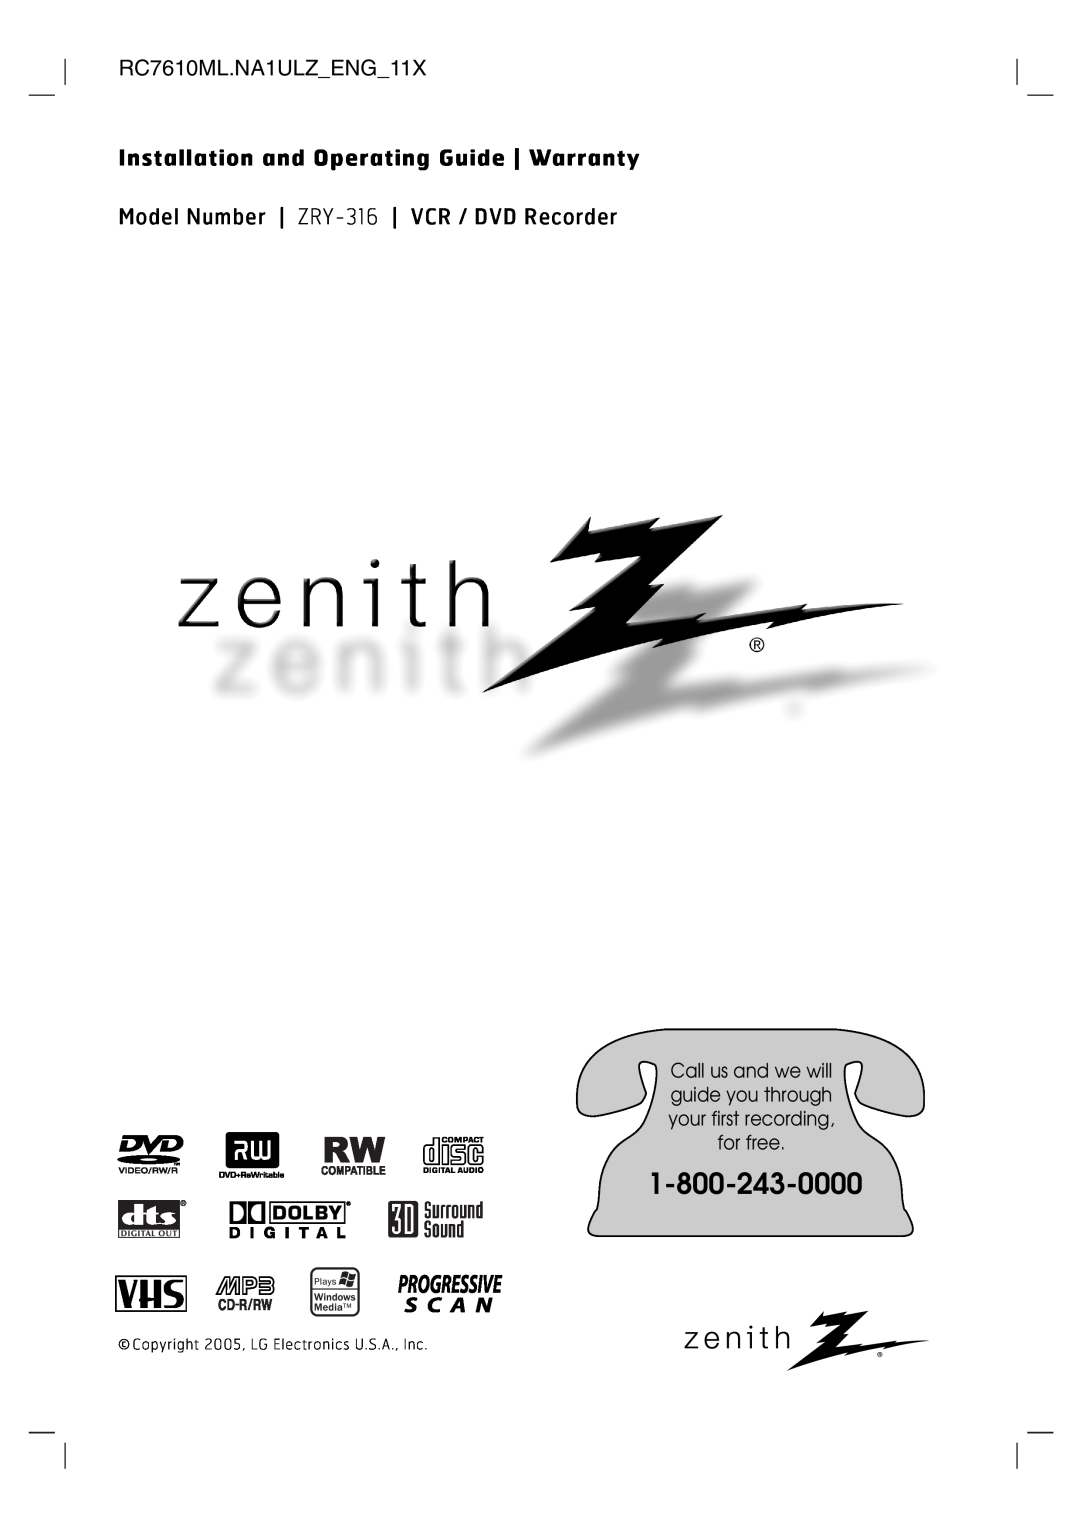 Zenith ZRY-316 warranty RC7610ML.NA1ULZENG11X, Installation and Operating Guide Warranty 